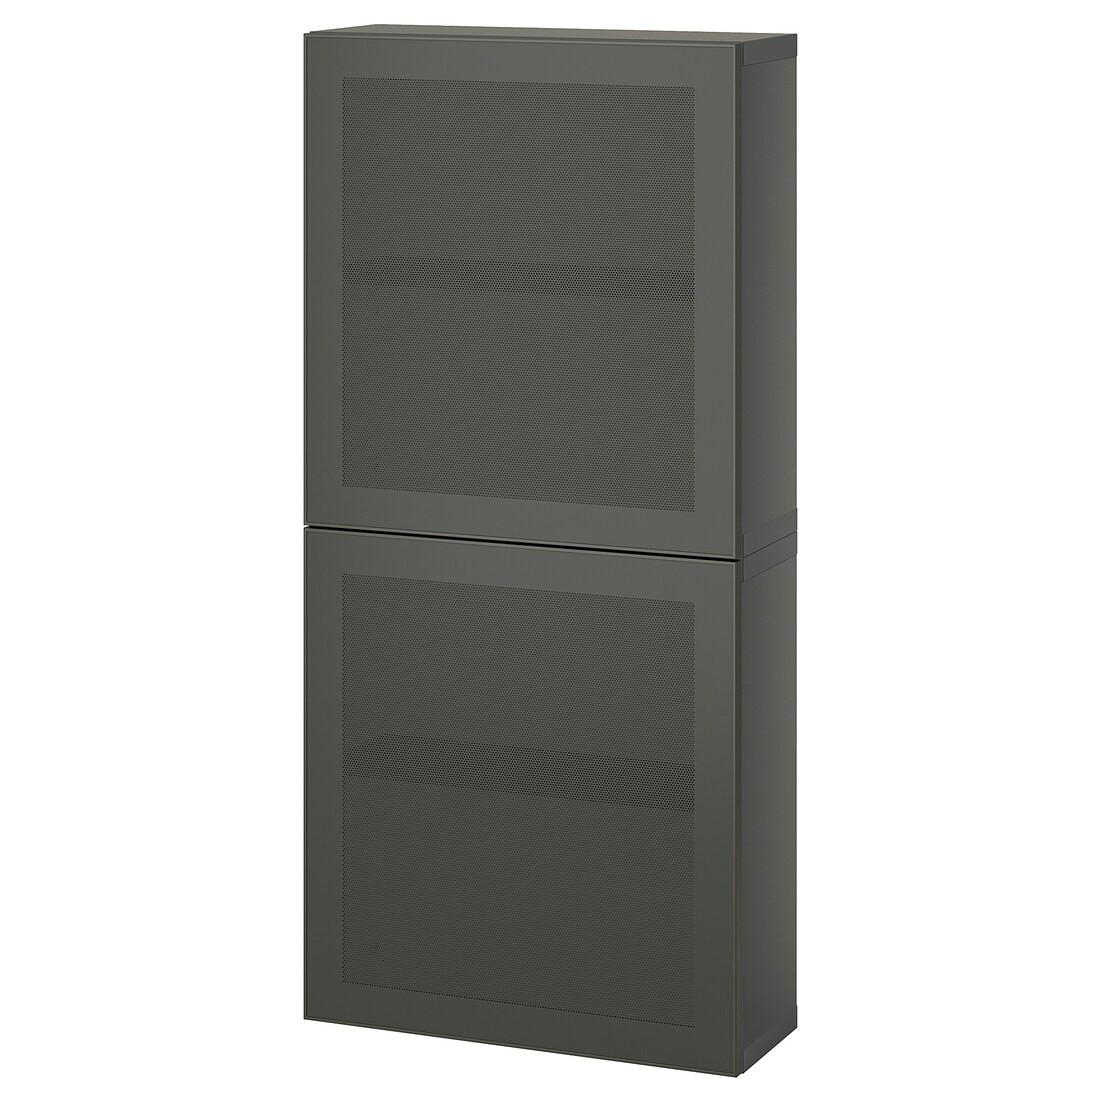 BESTÅ Навесной шкаф с 2 дверями, темно-серый / Mörtviken темно-серый, 60x22x128 см